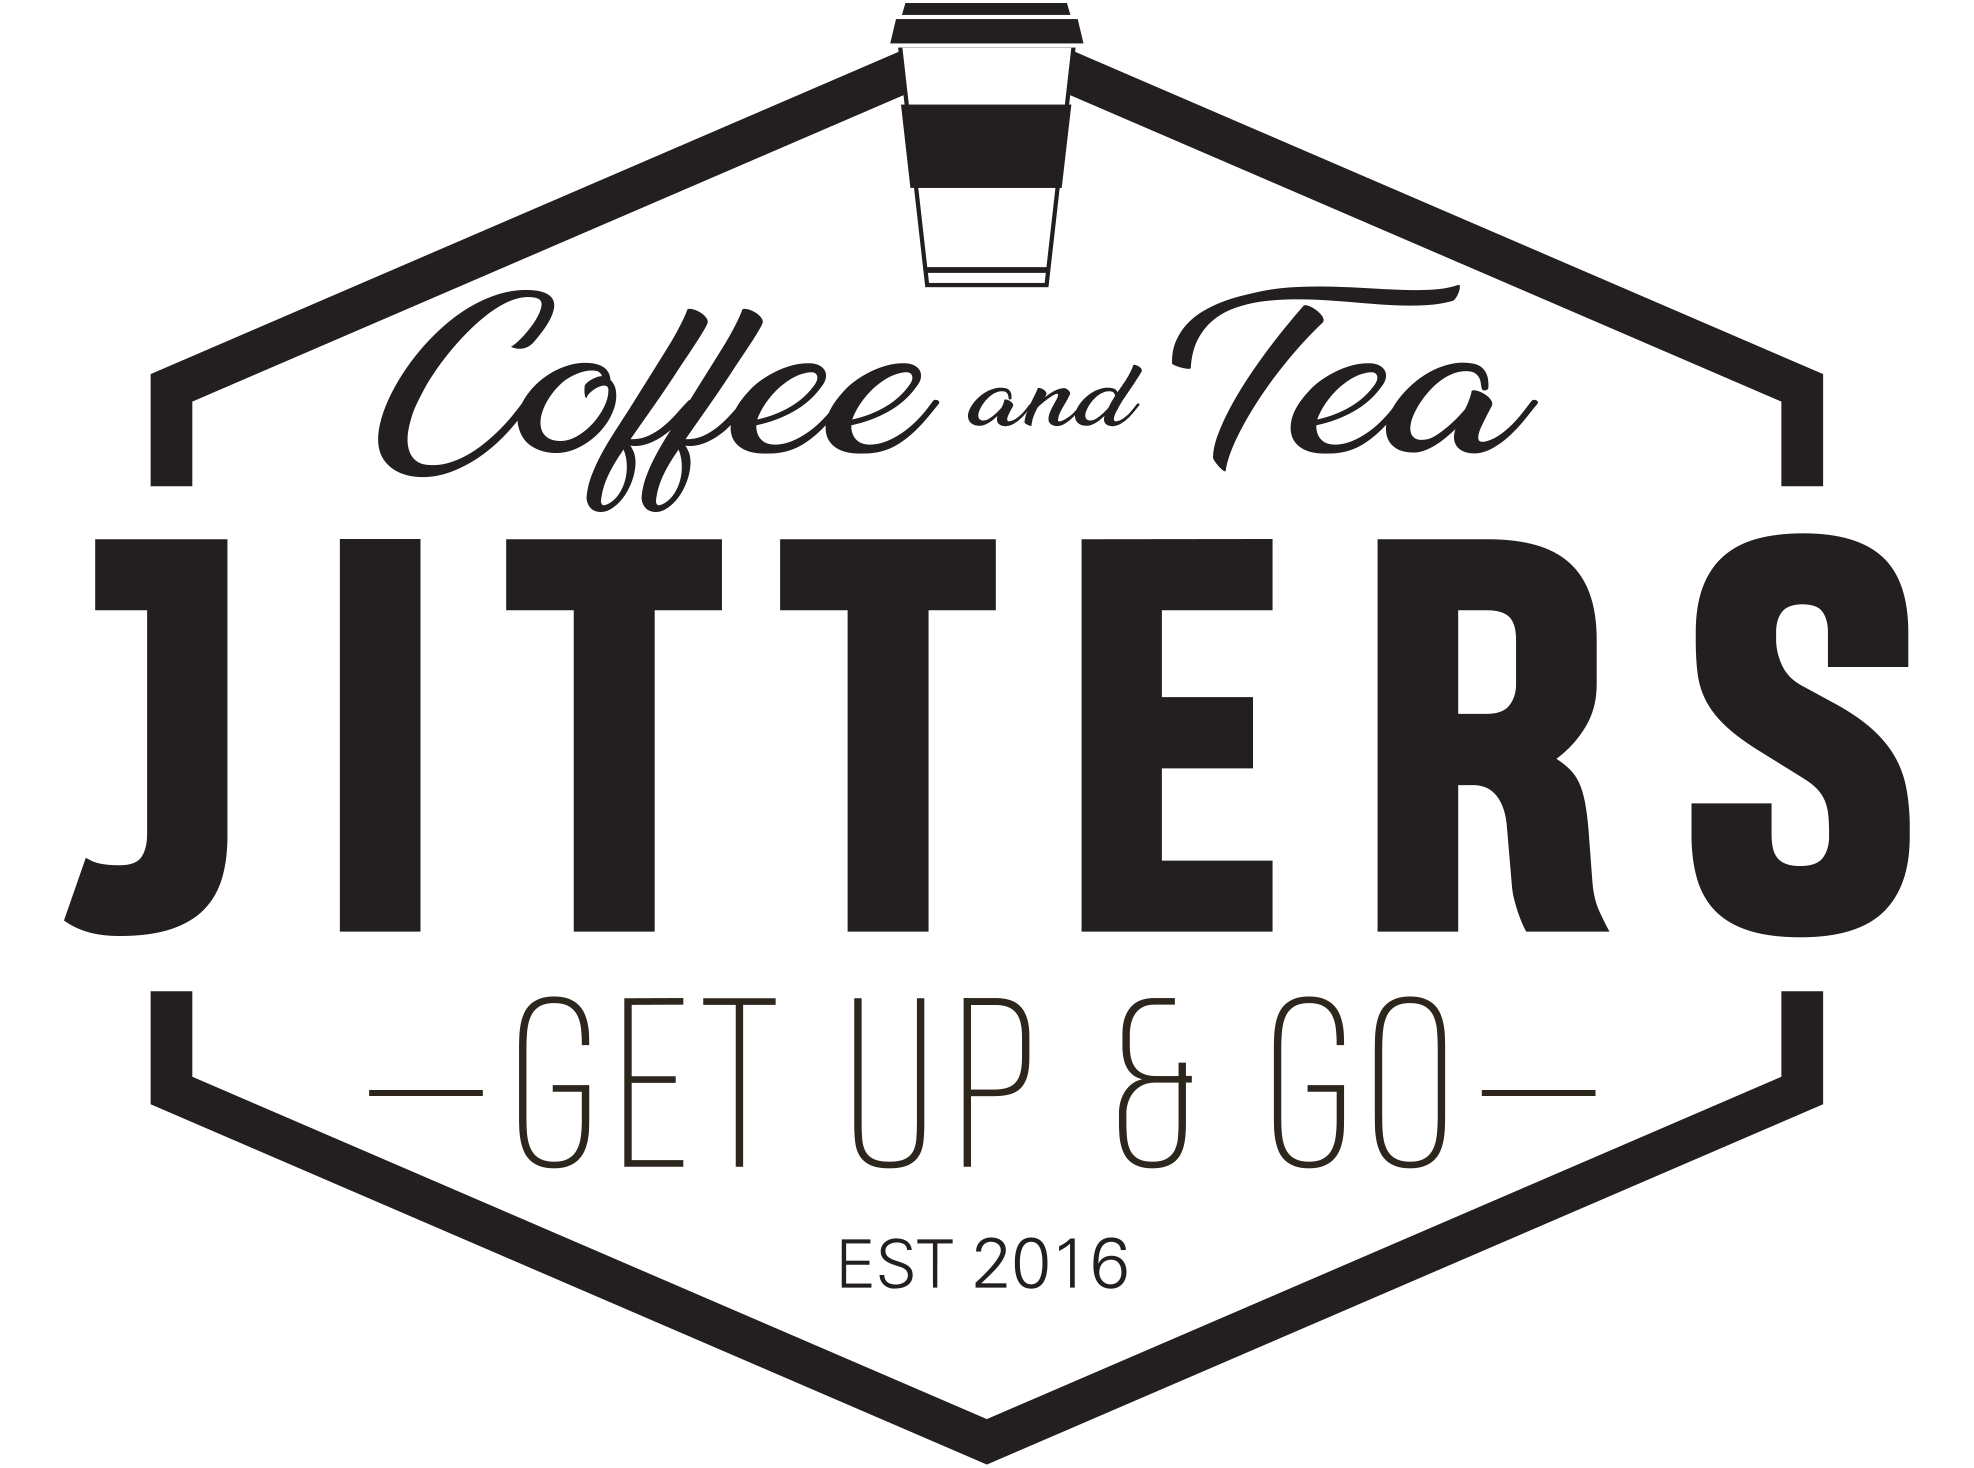 Jitters Coffee and Tea